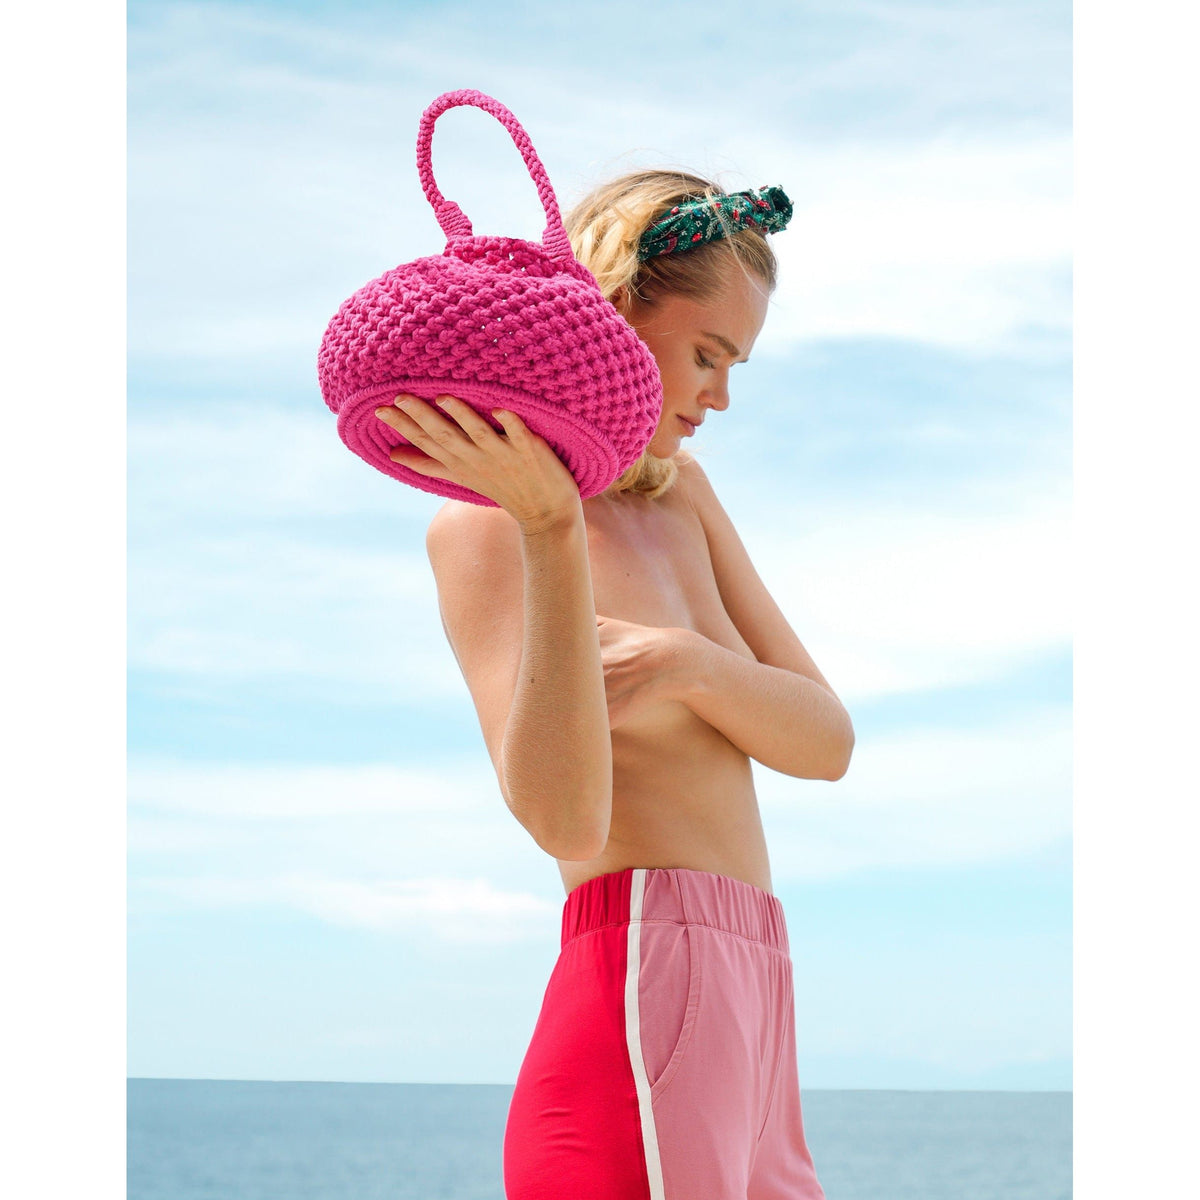 BrunnaCo One size / Hot pink / 100% Cotton Naga Macrame Bucket Bag, in Shocking Pink by BrunnaCo